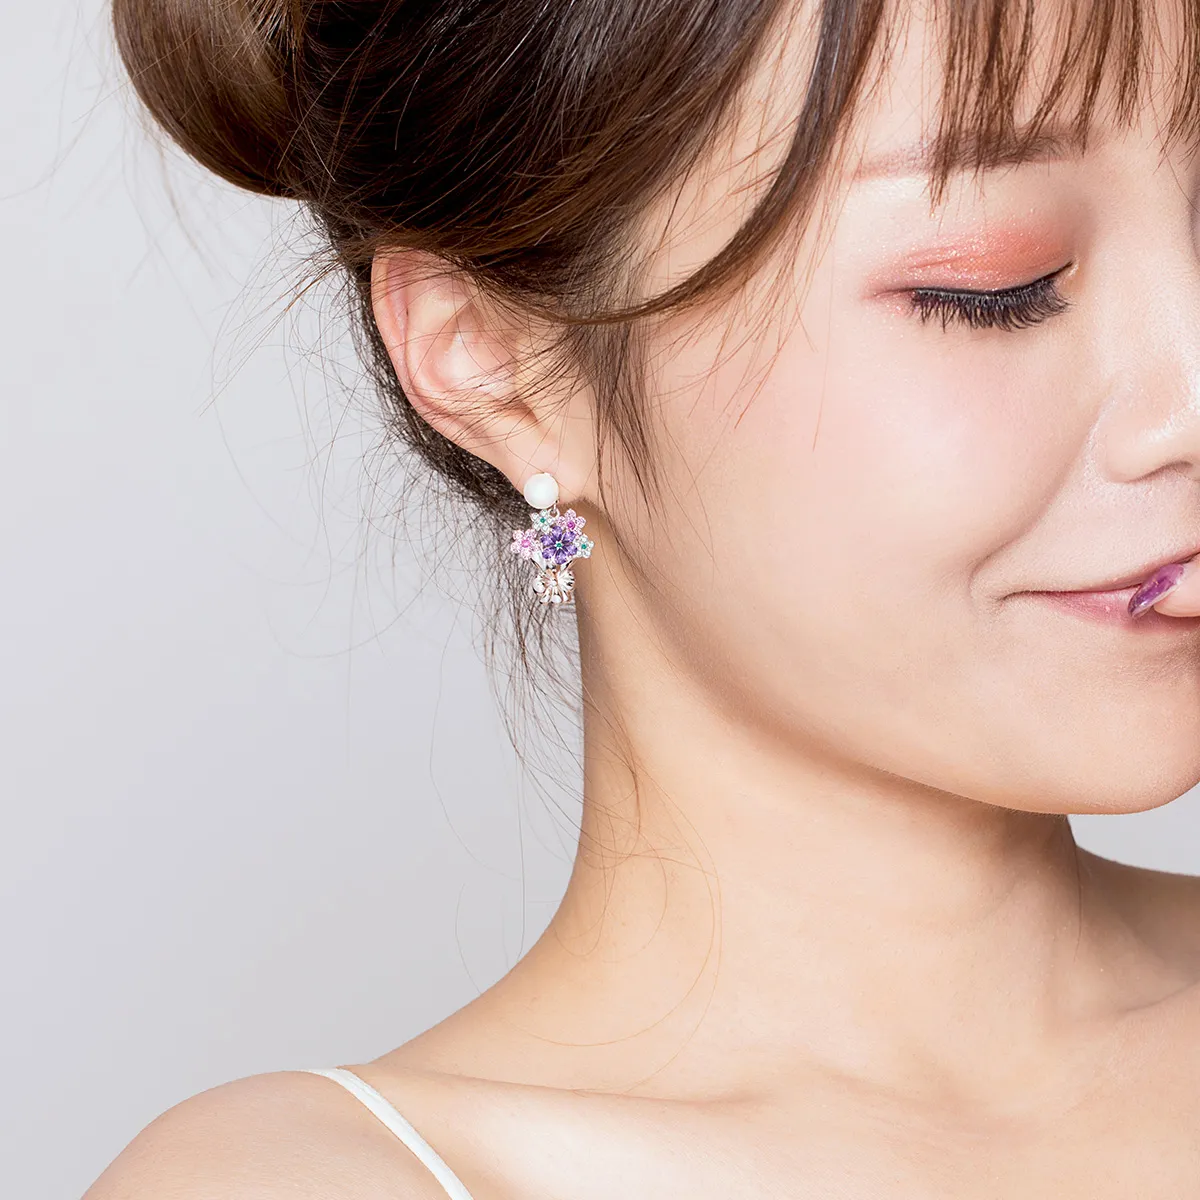 Pandora Style Holding Flowers Stud Earrings - BSE152